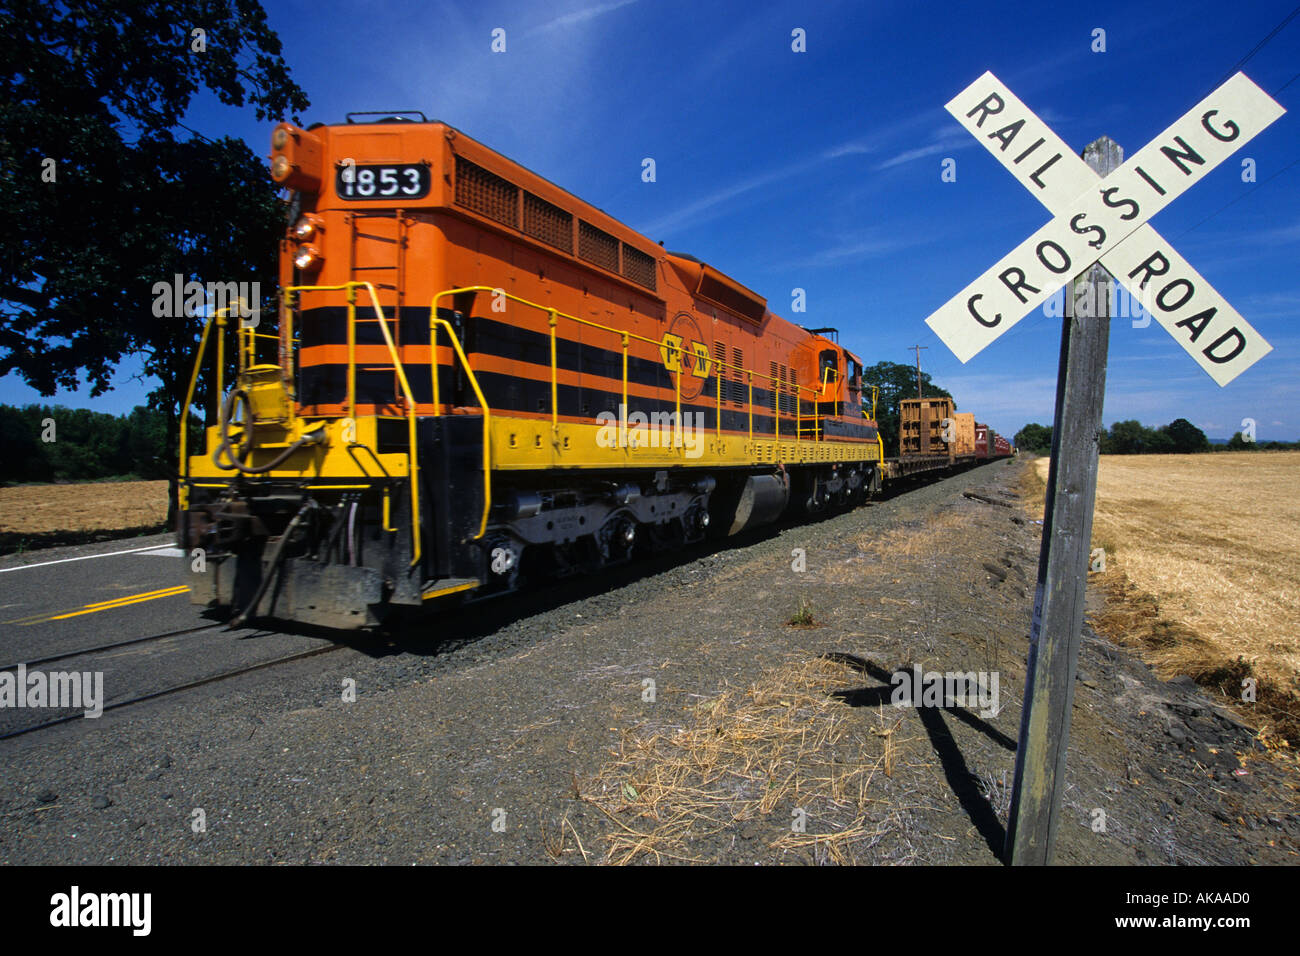 Train at railroad crossing Stock Photo